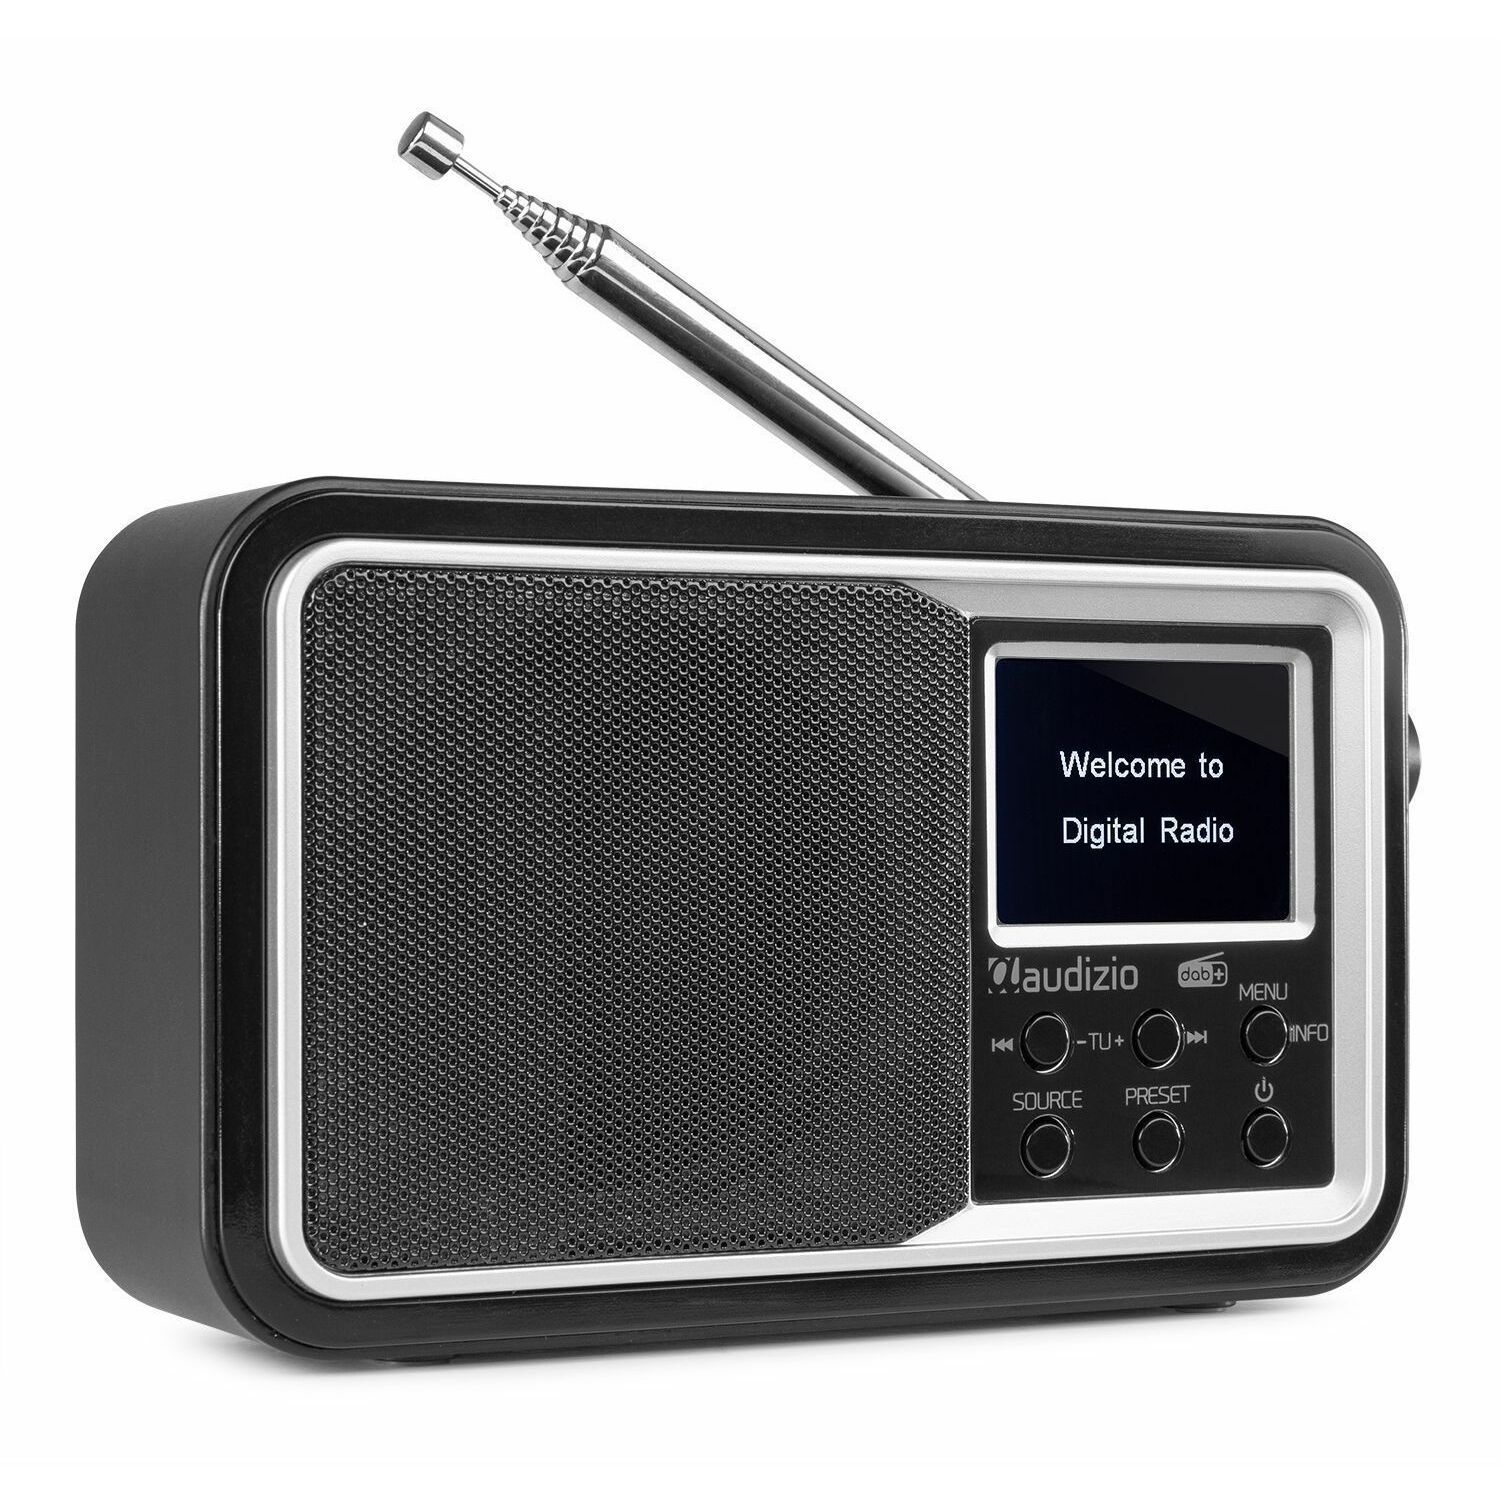 Audizio Parma draagbare DAB radio met Bluetooth FM radio - Zwart kopen?